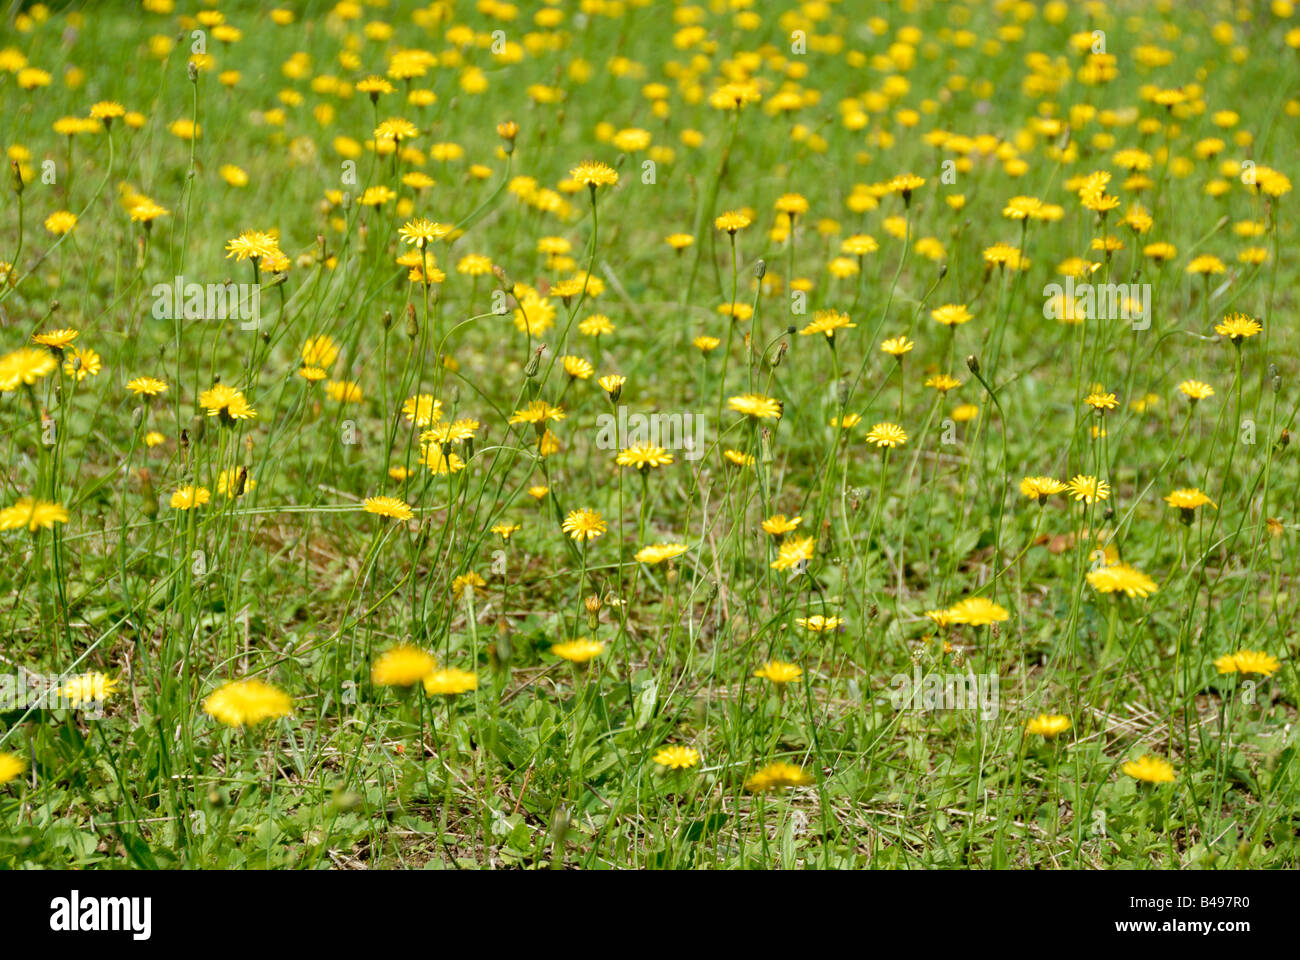 Stock photo of a field of Hawkweed yellow flowers Stock Photo